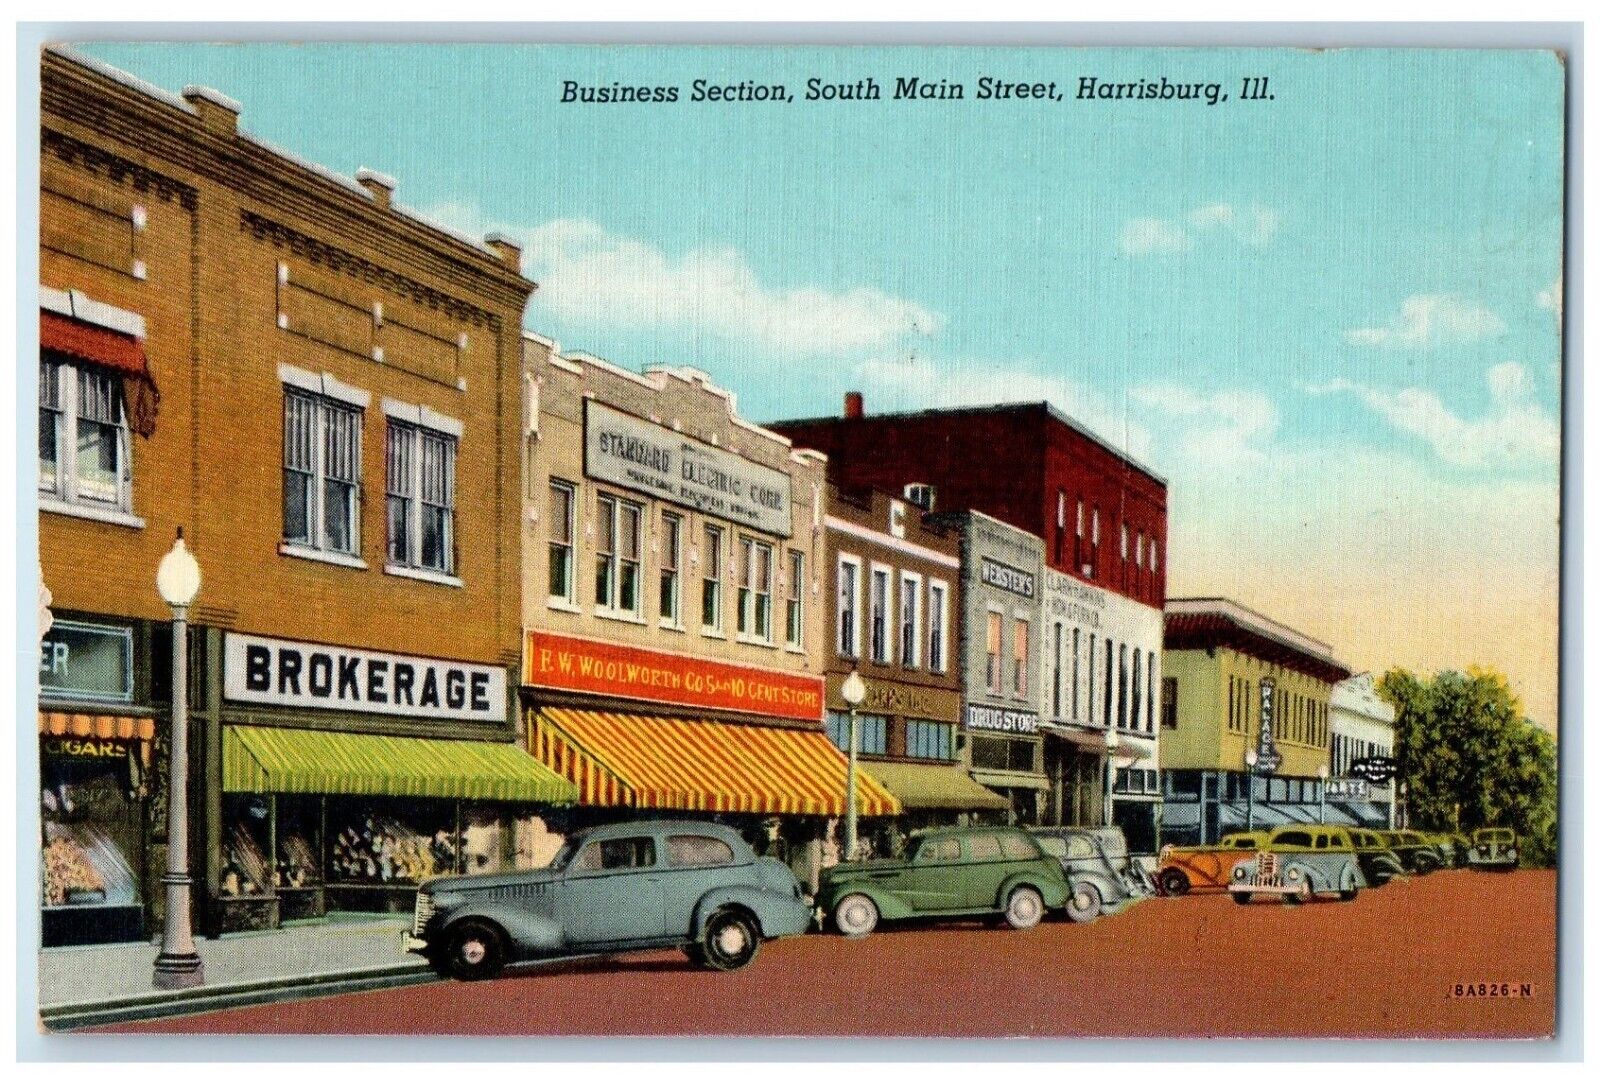 c1940 Business Section South Main Street Brokerage Harrisburg Illinois Postcard